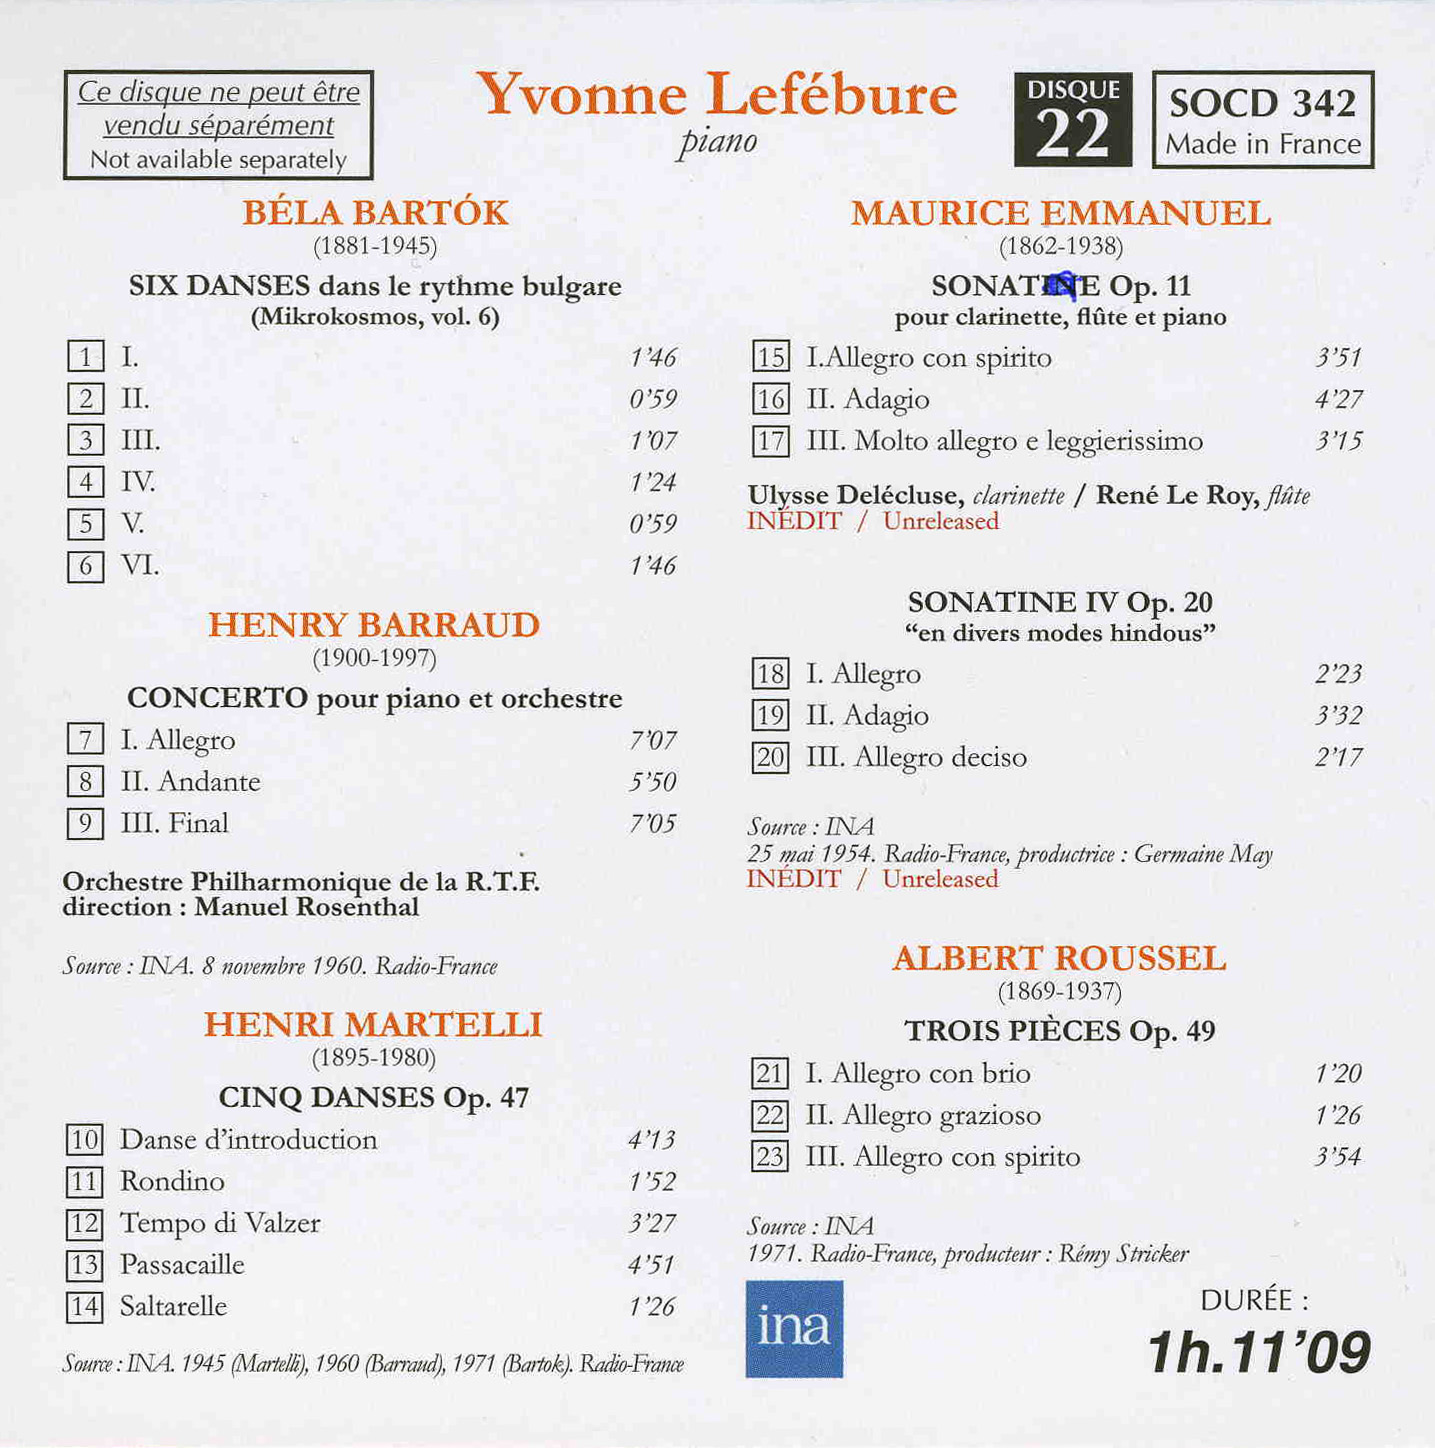 Yvonne Lefébure2